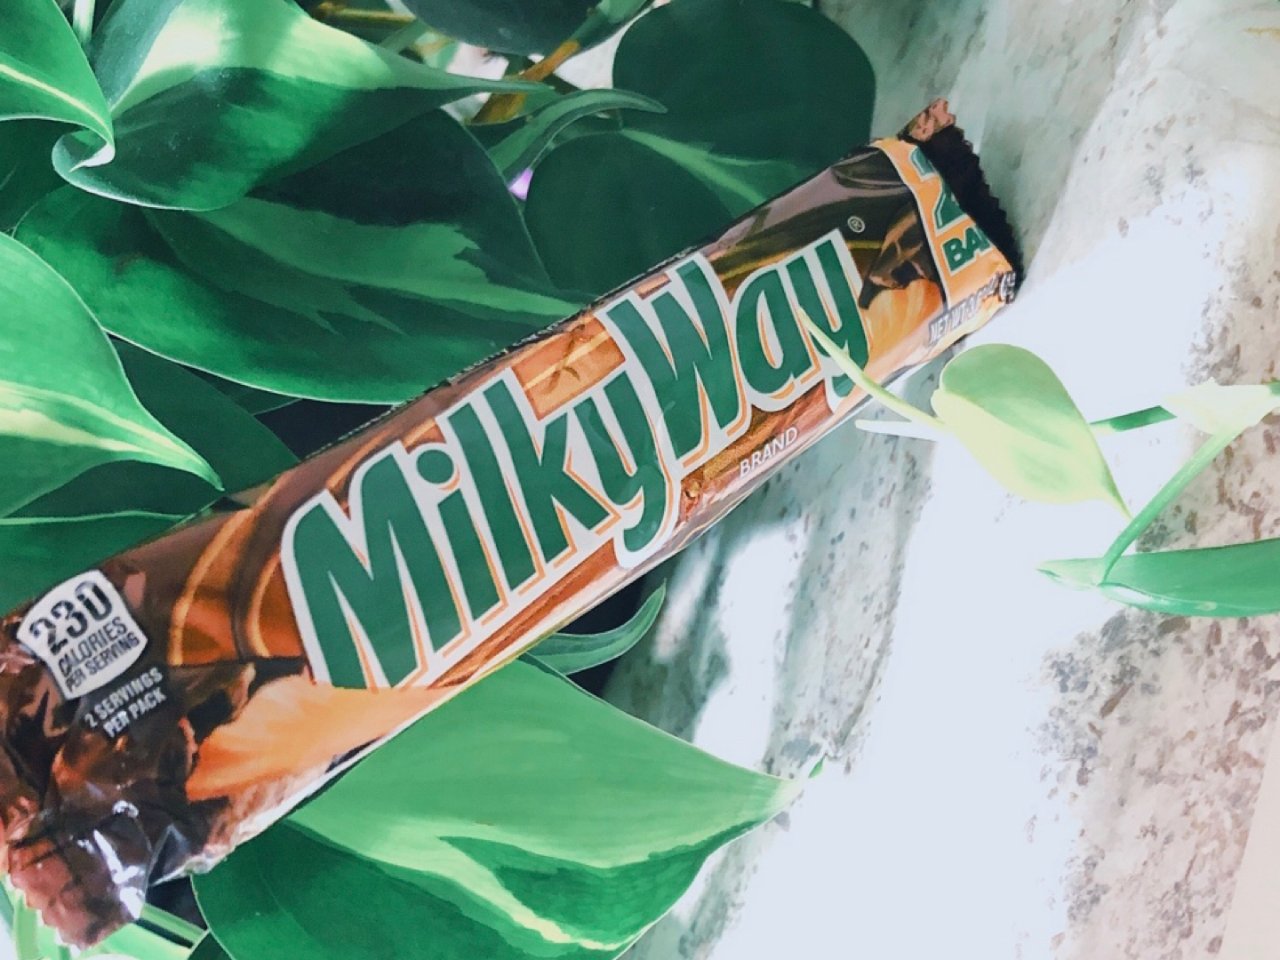 Milky way巧克力棒...